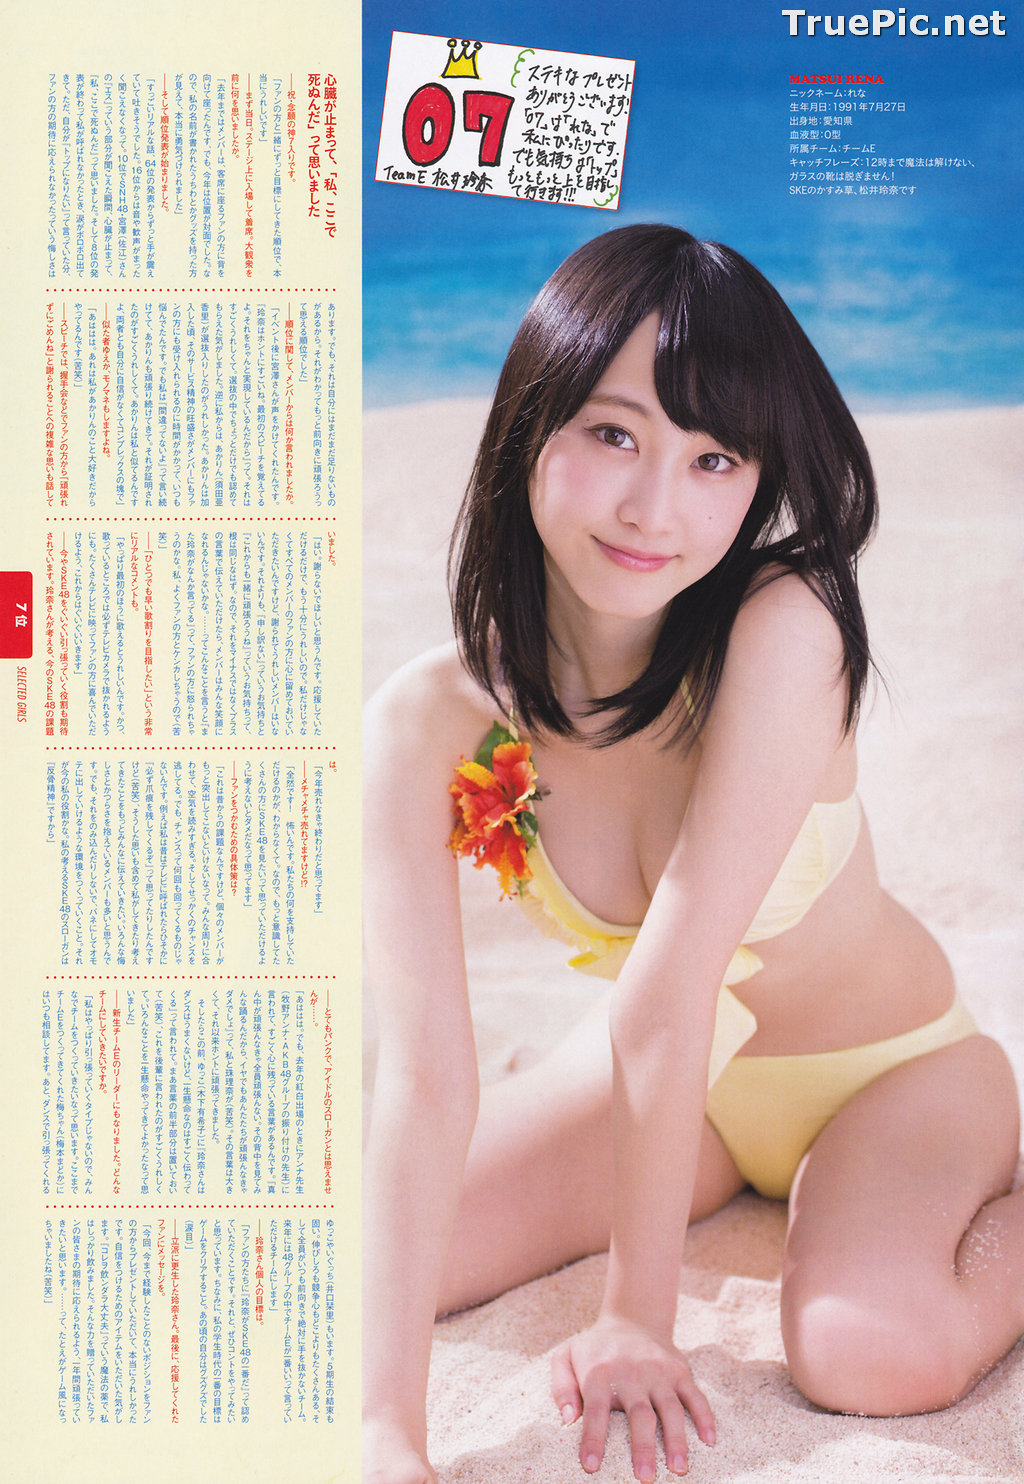 Image AKB48 General Election! Swimsuit Surprise Announcement 2013 - TruePic.net - Picture-28